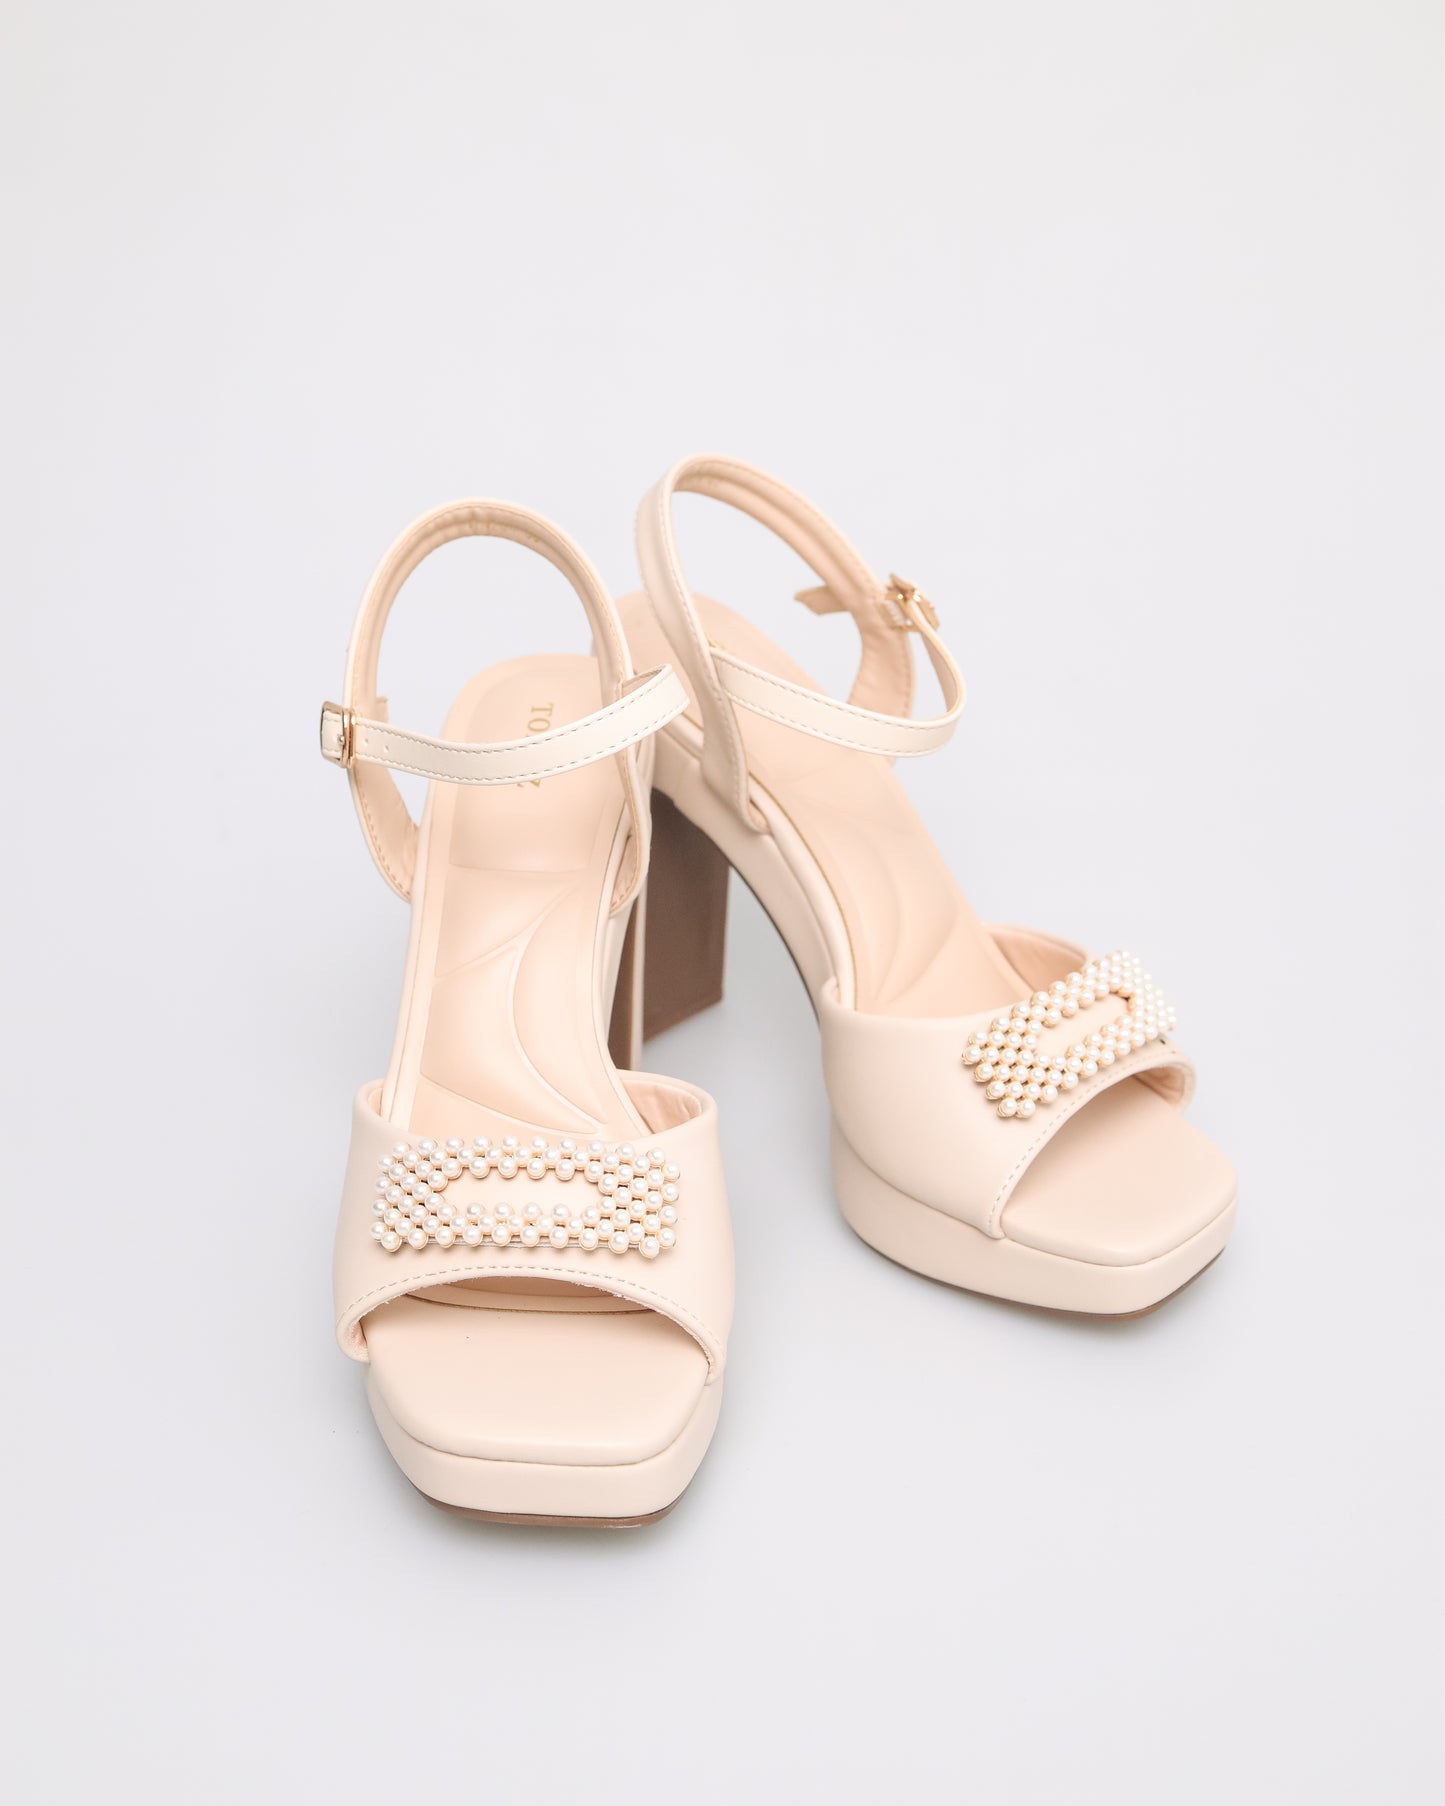 Tomaz NN204 Ladies Beaded Open Toe Heels (Cream)